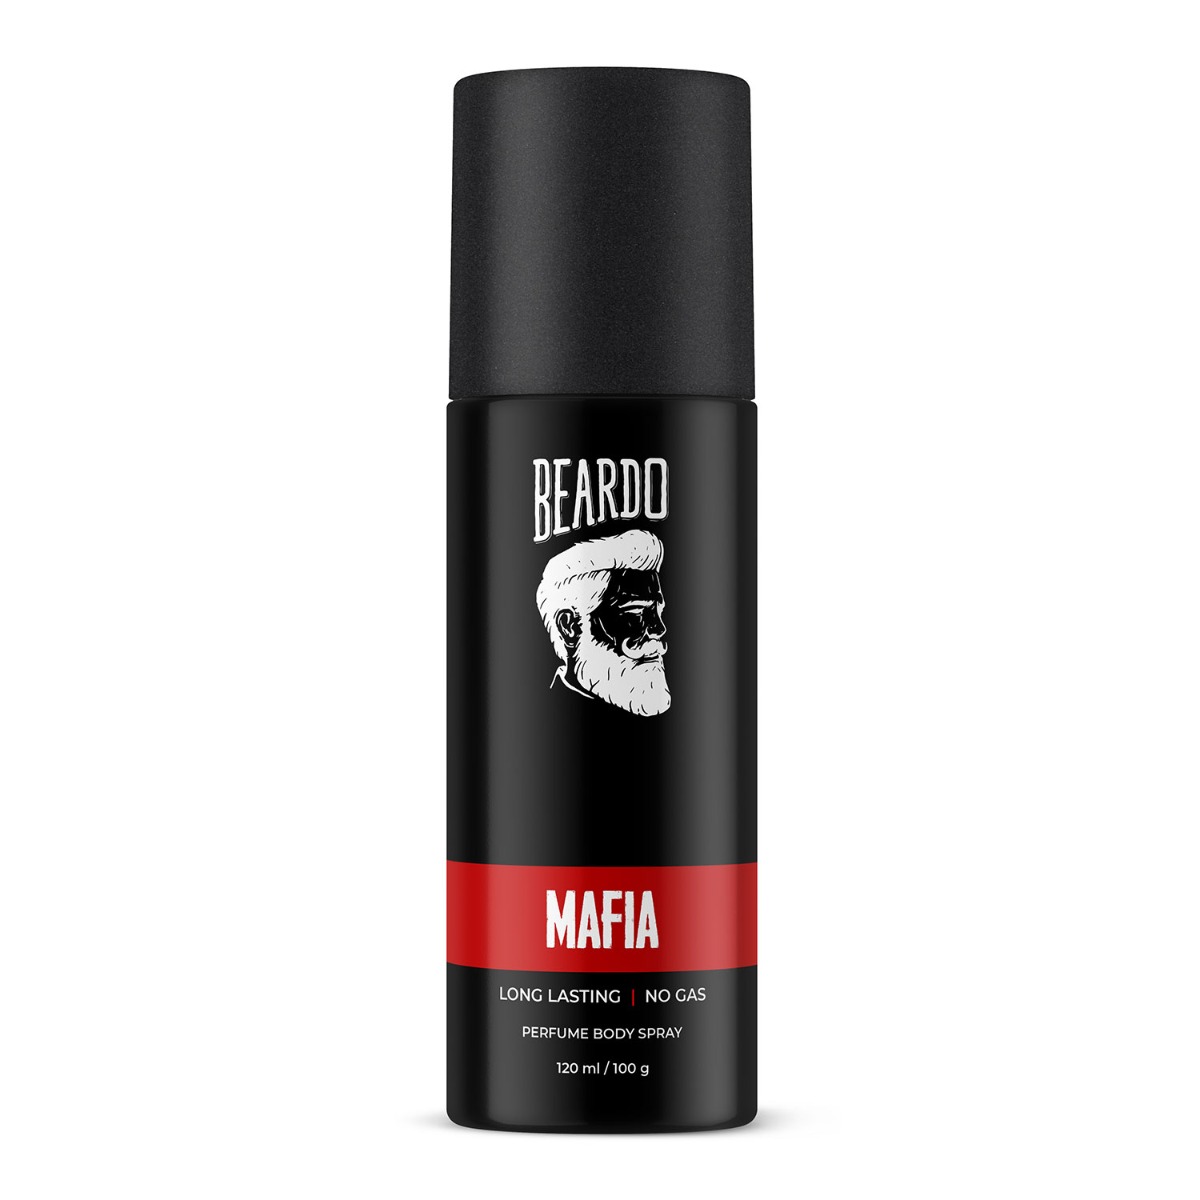 Beardo MAFIA Perfume Body Spray, 120ml